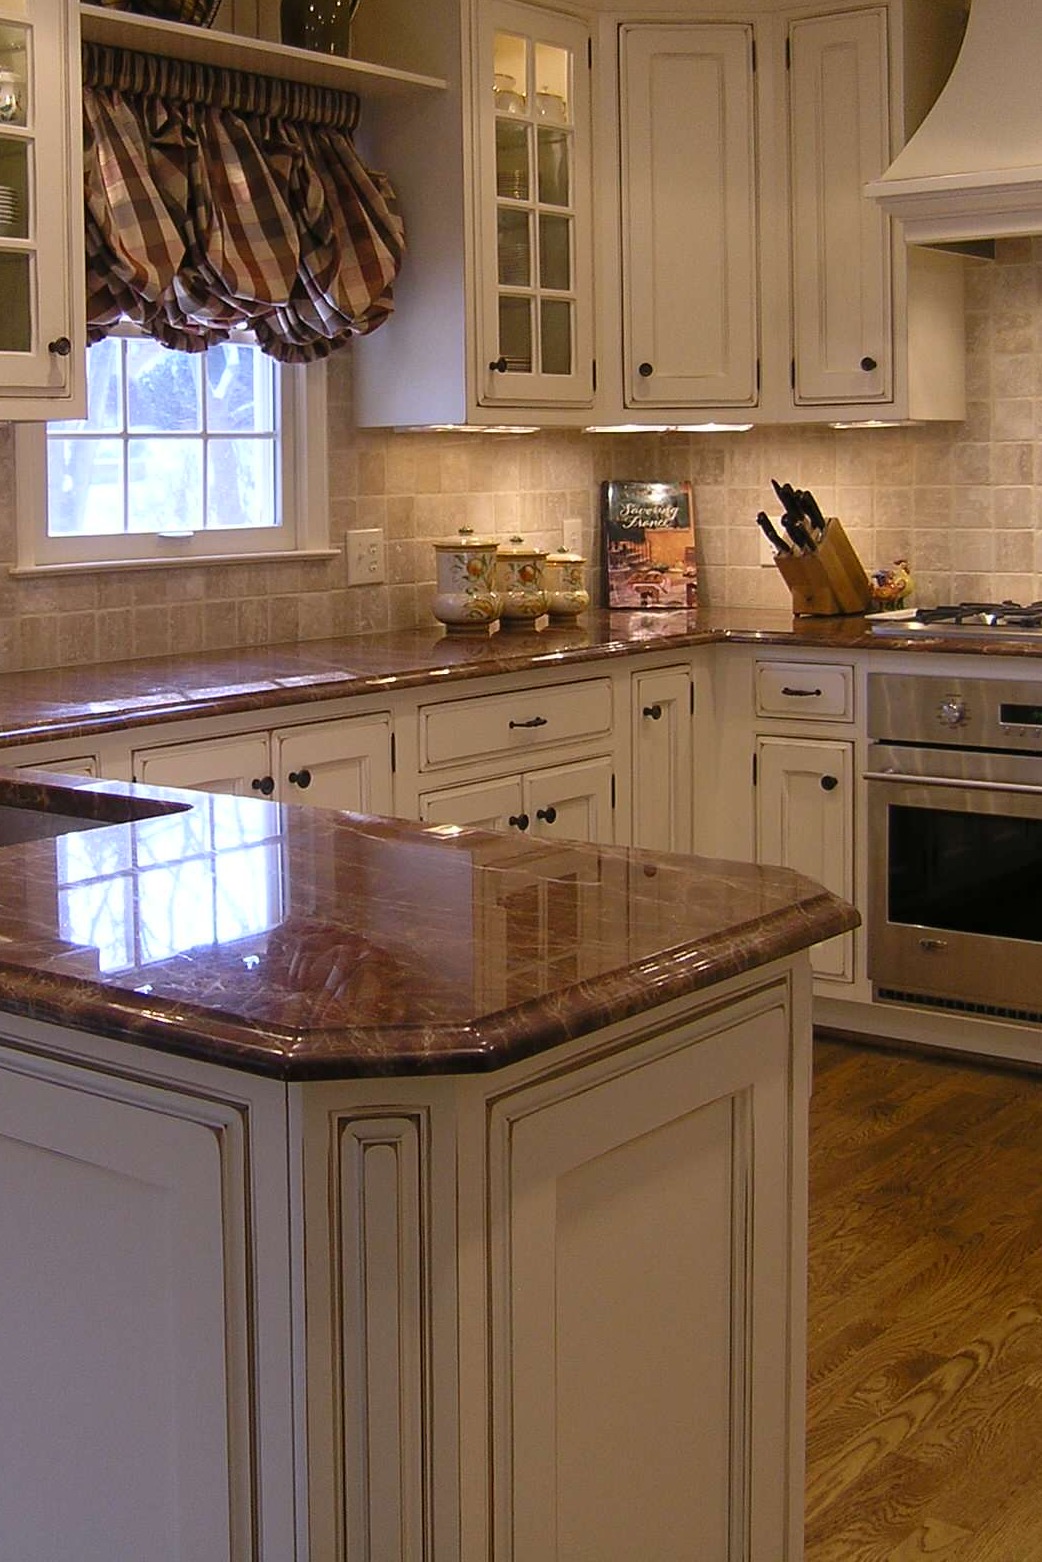 Majestic Brown Granite Countertop Glazed Cream Cabinet Travertine Backsplash Dark Hardwood Floor